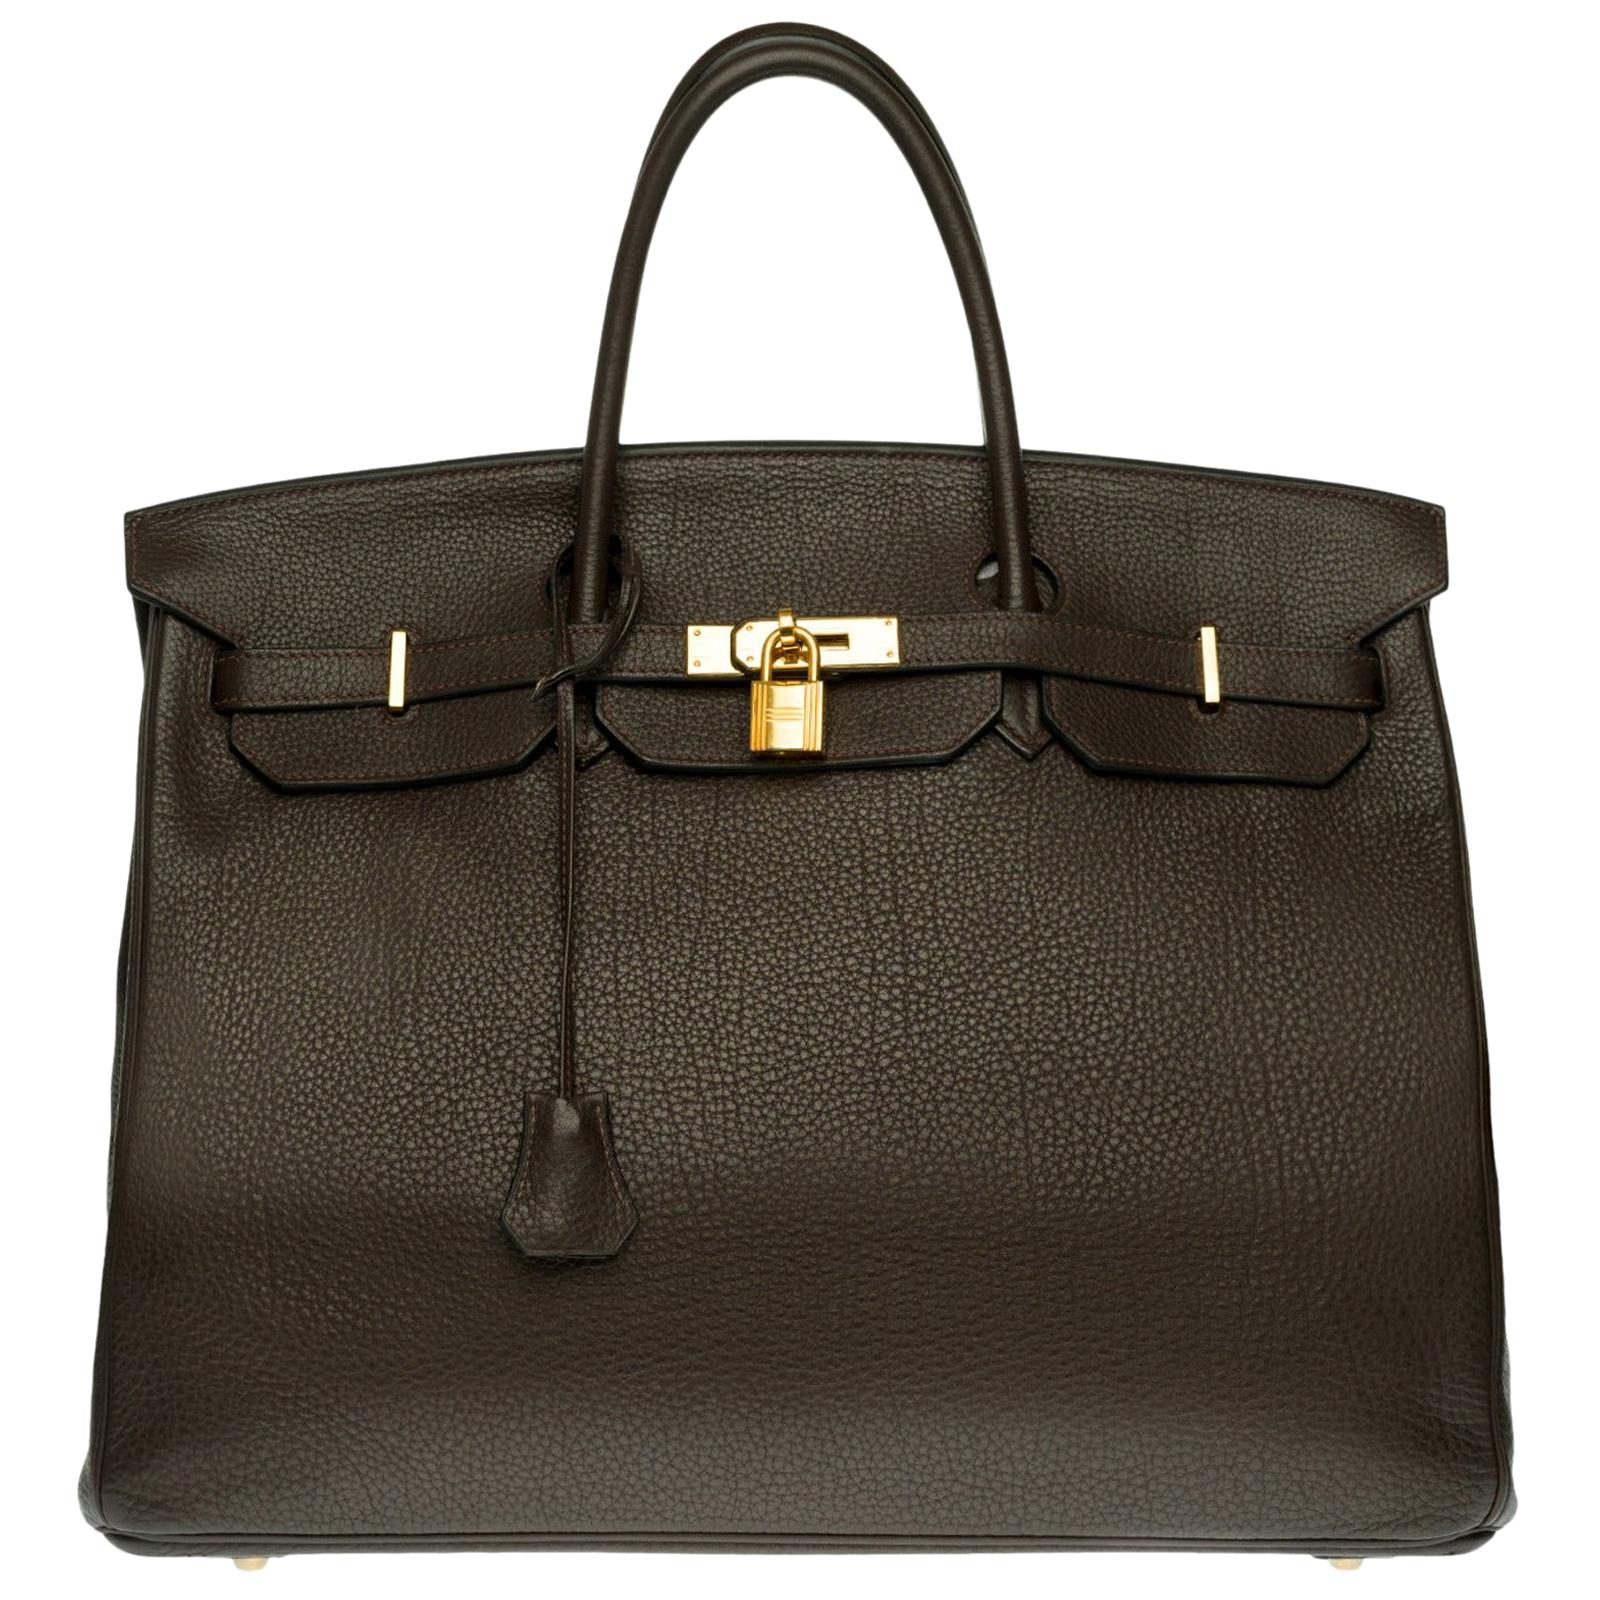 Stunning Hermes Birkin 40cm handbag in Brown Togo leather with gold hardware